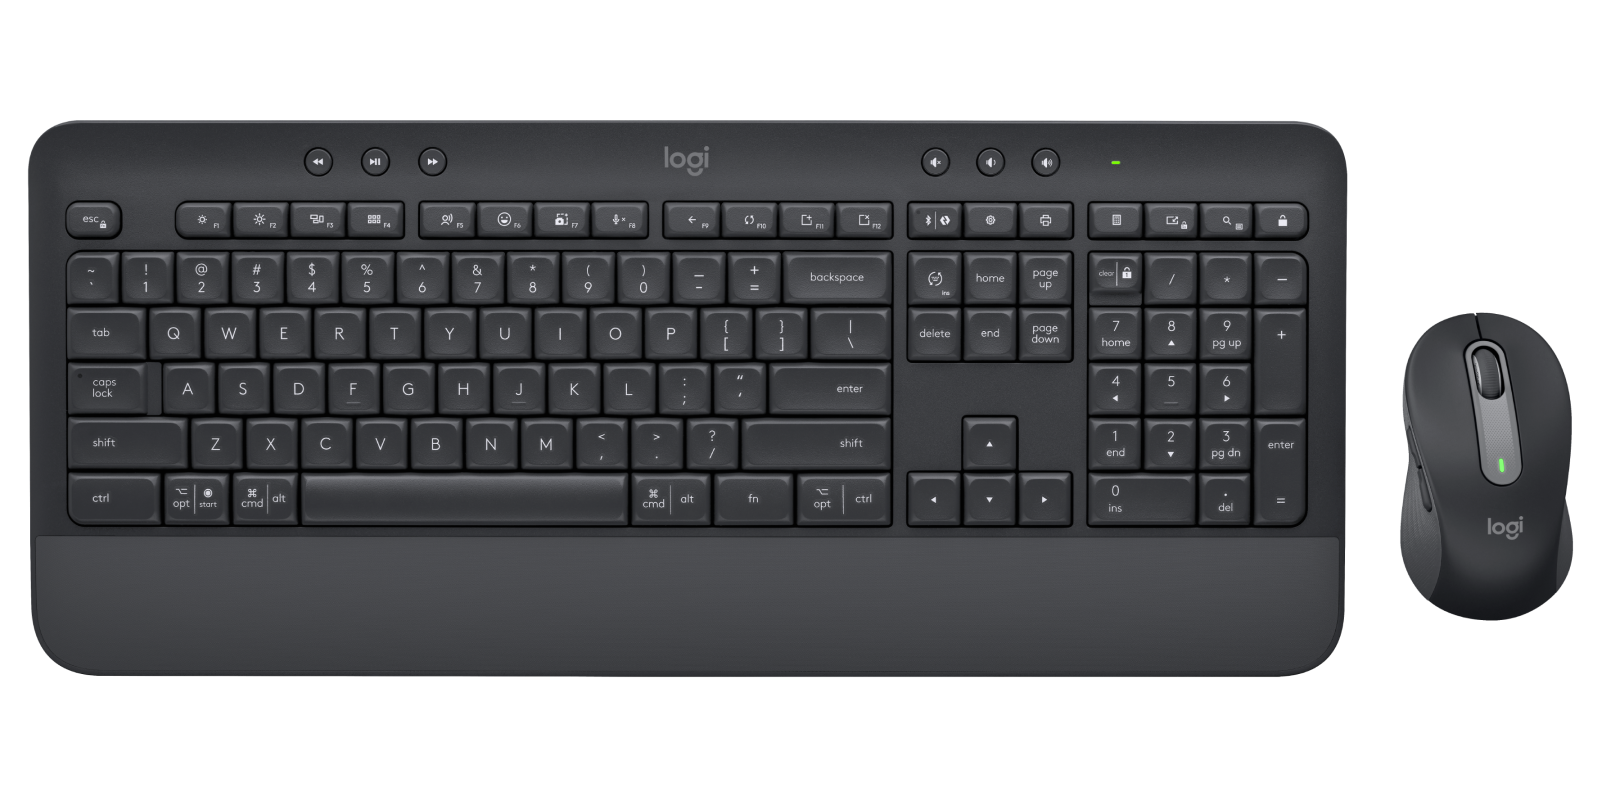 Logitech Signature MK650 Combo For Business clavier Souris incluse